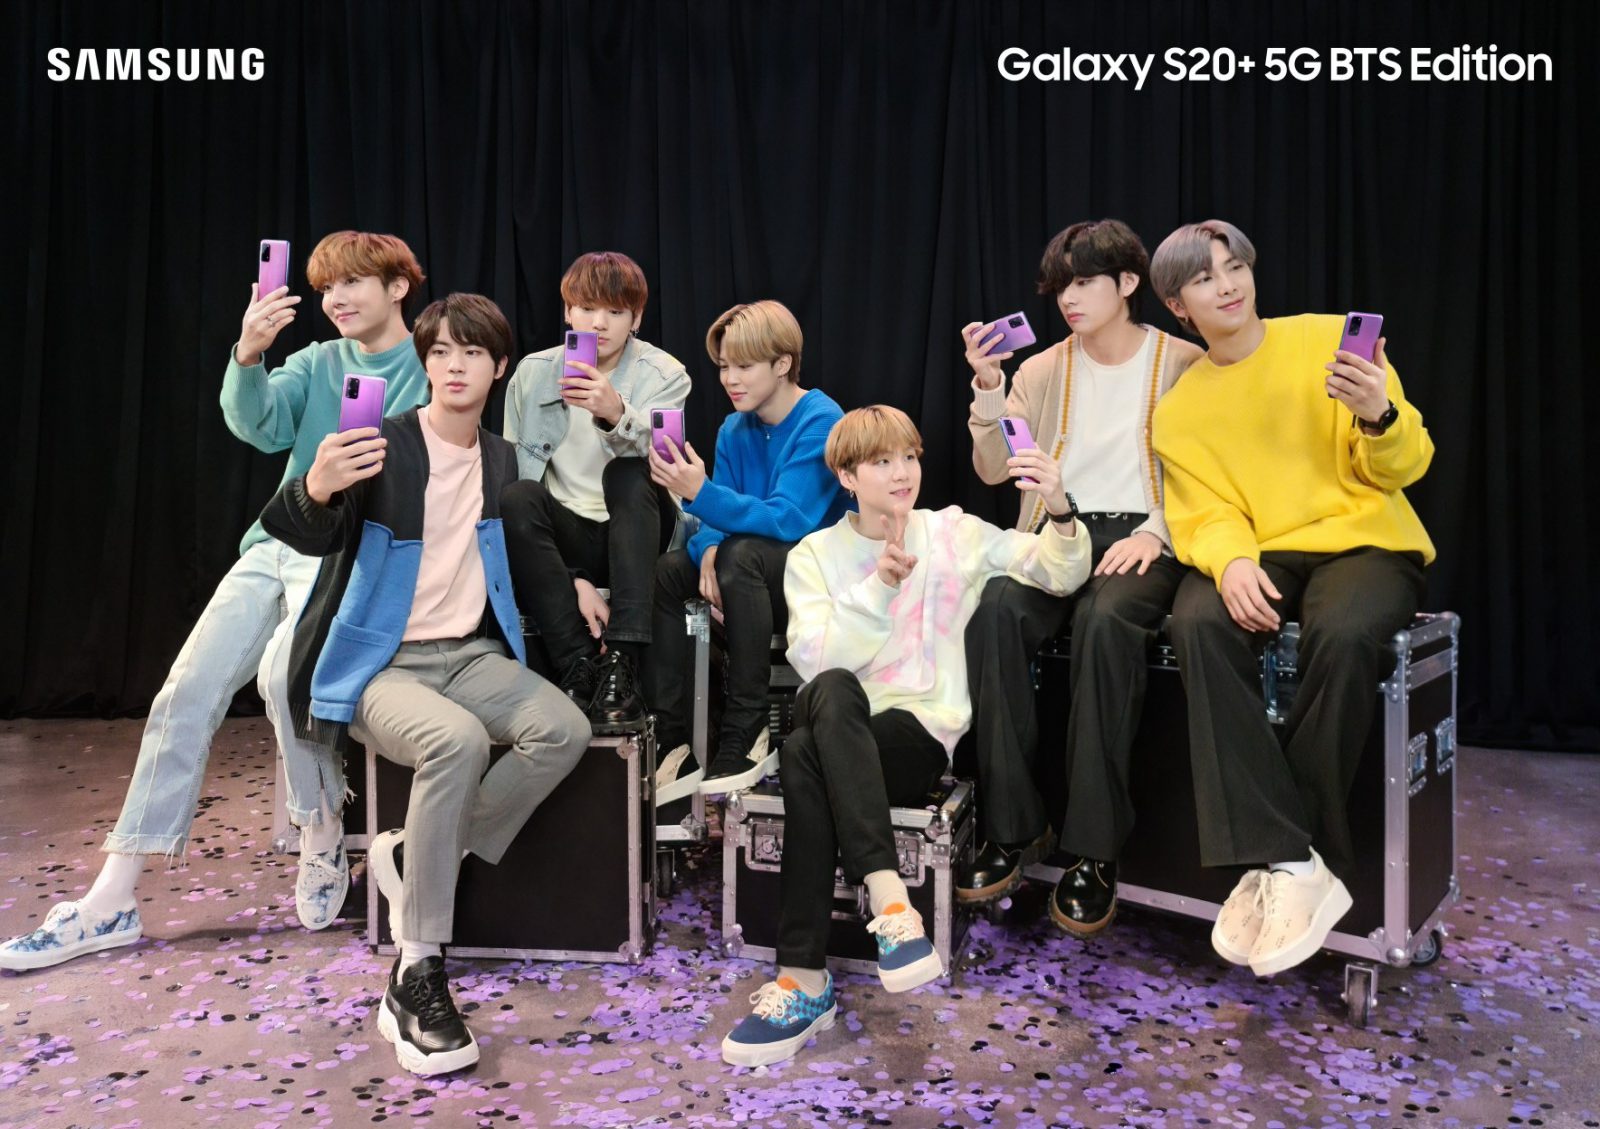 Samsung Galaxy S20 BTS Edition 01 | A.R.M.Y | SAMSUNG วางจำหน่าย Galaxy S20+ รุ่นพิเศษ BTS Edition เอาใจเหล่า A.R.M.Y ชาวไทยในราคาผ่อนเริ่มต้น 2,250 บาท ห้ามพลาด เพราะหมดแล้วหมดเลย!